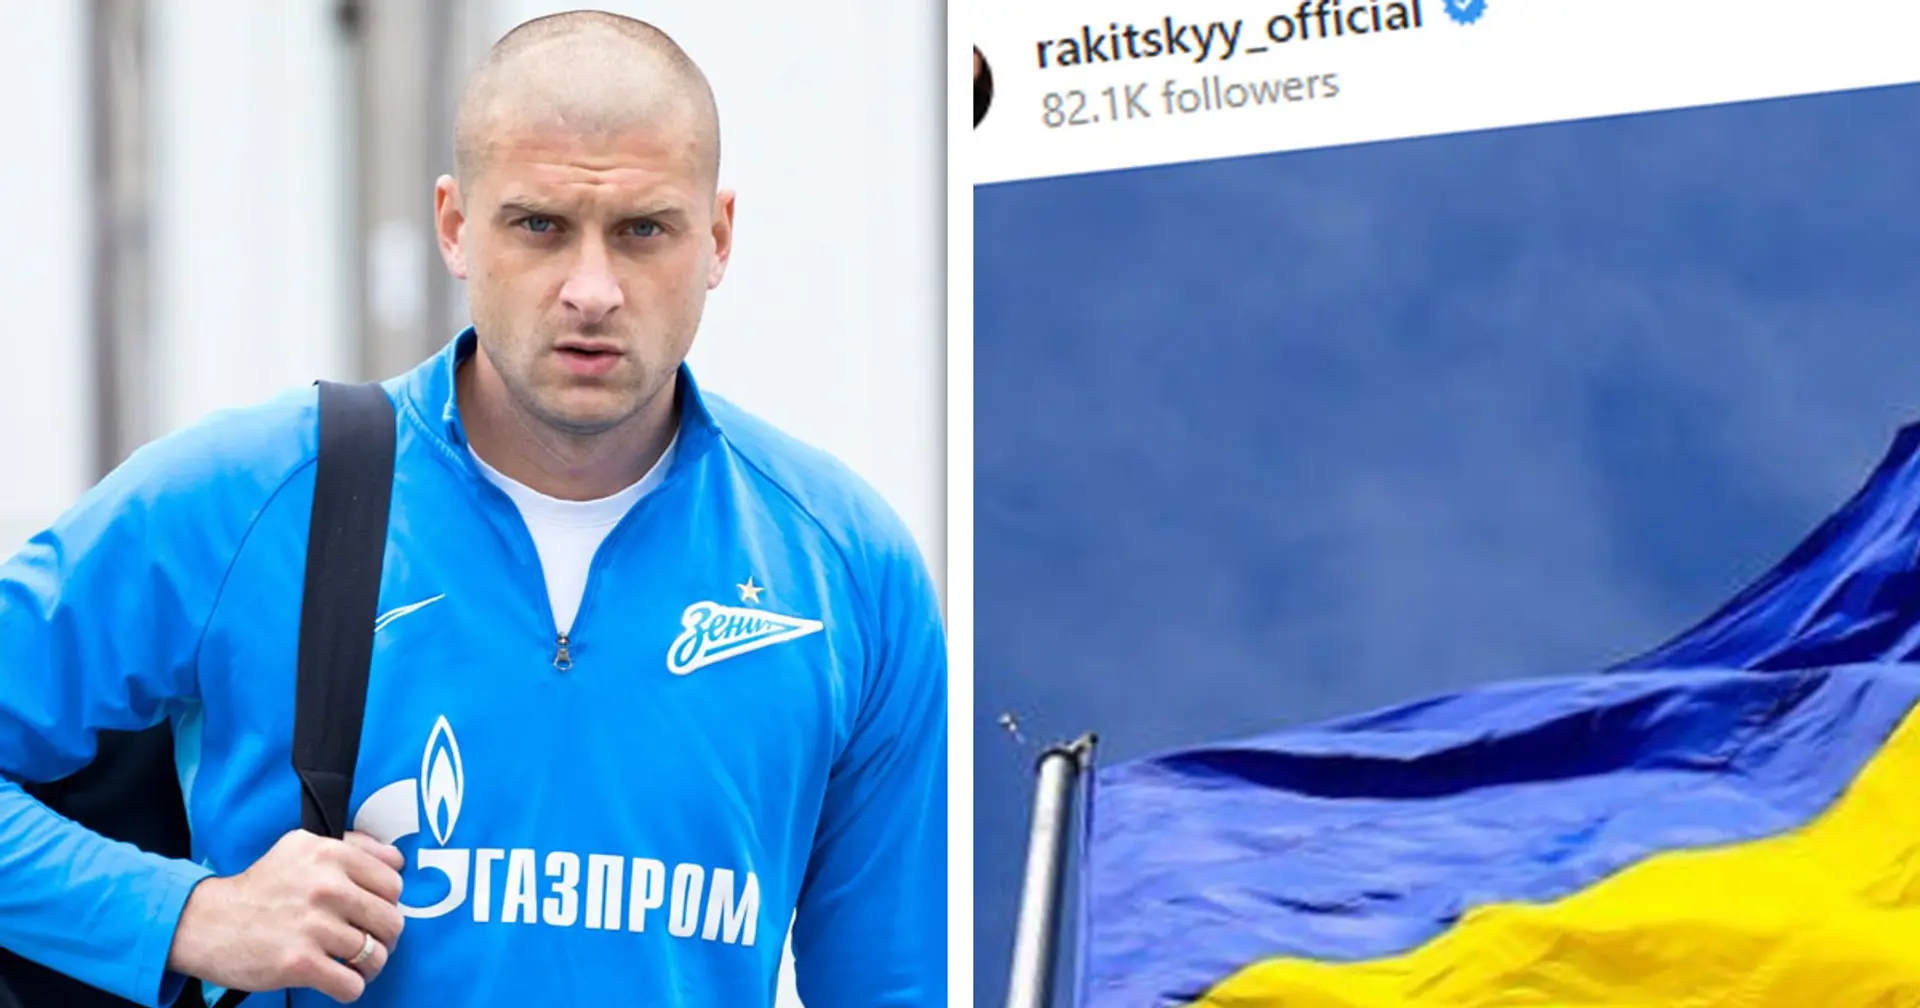 Zenit reportedly dropped Ukrainian defender Rakitskiy for speaking out against Russian invasion